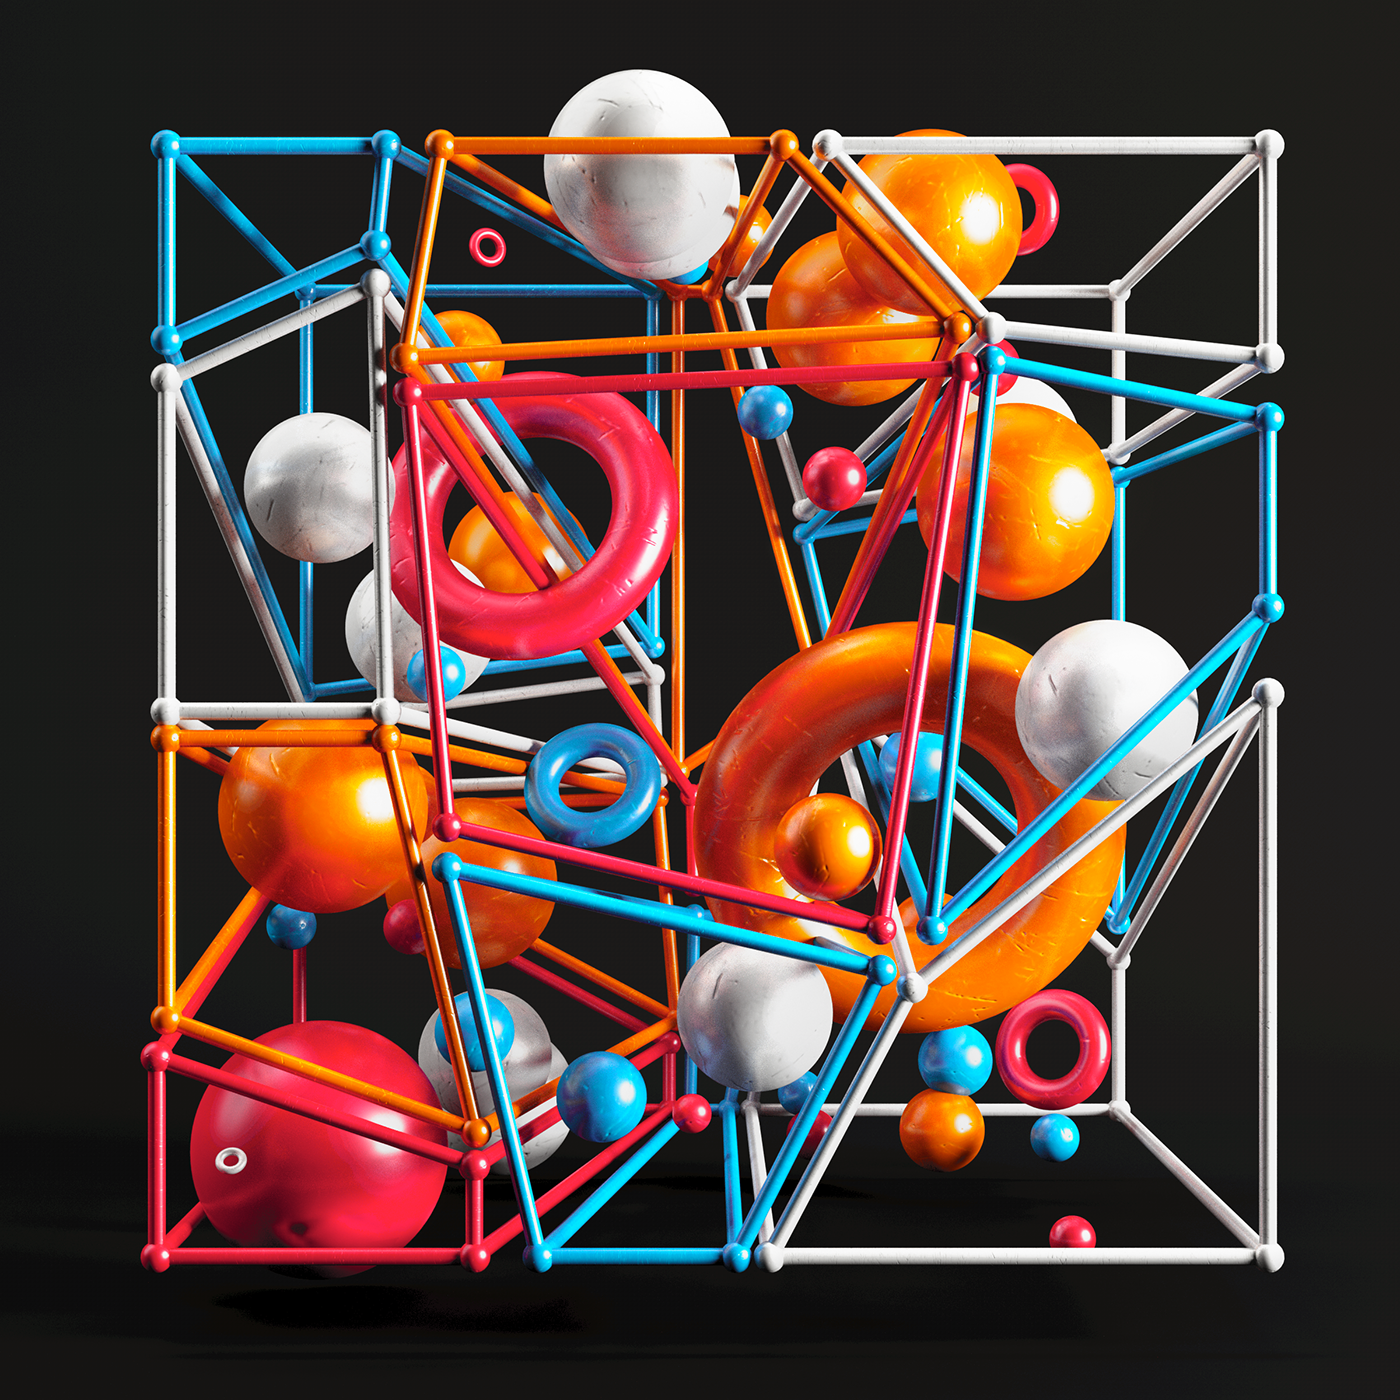 composition compositions cinema4d c4d maxon otoy octane kandinsky abstract Behance 3D instagram beeple